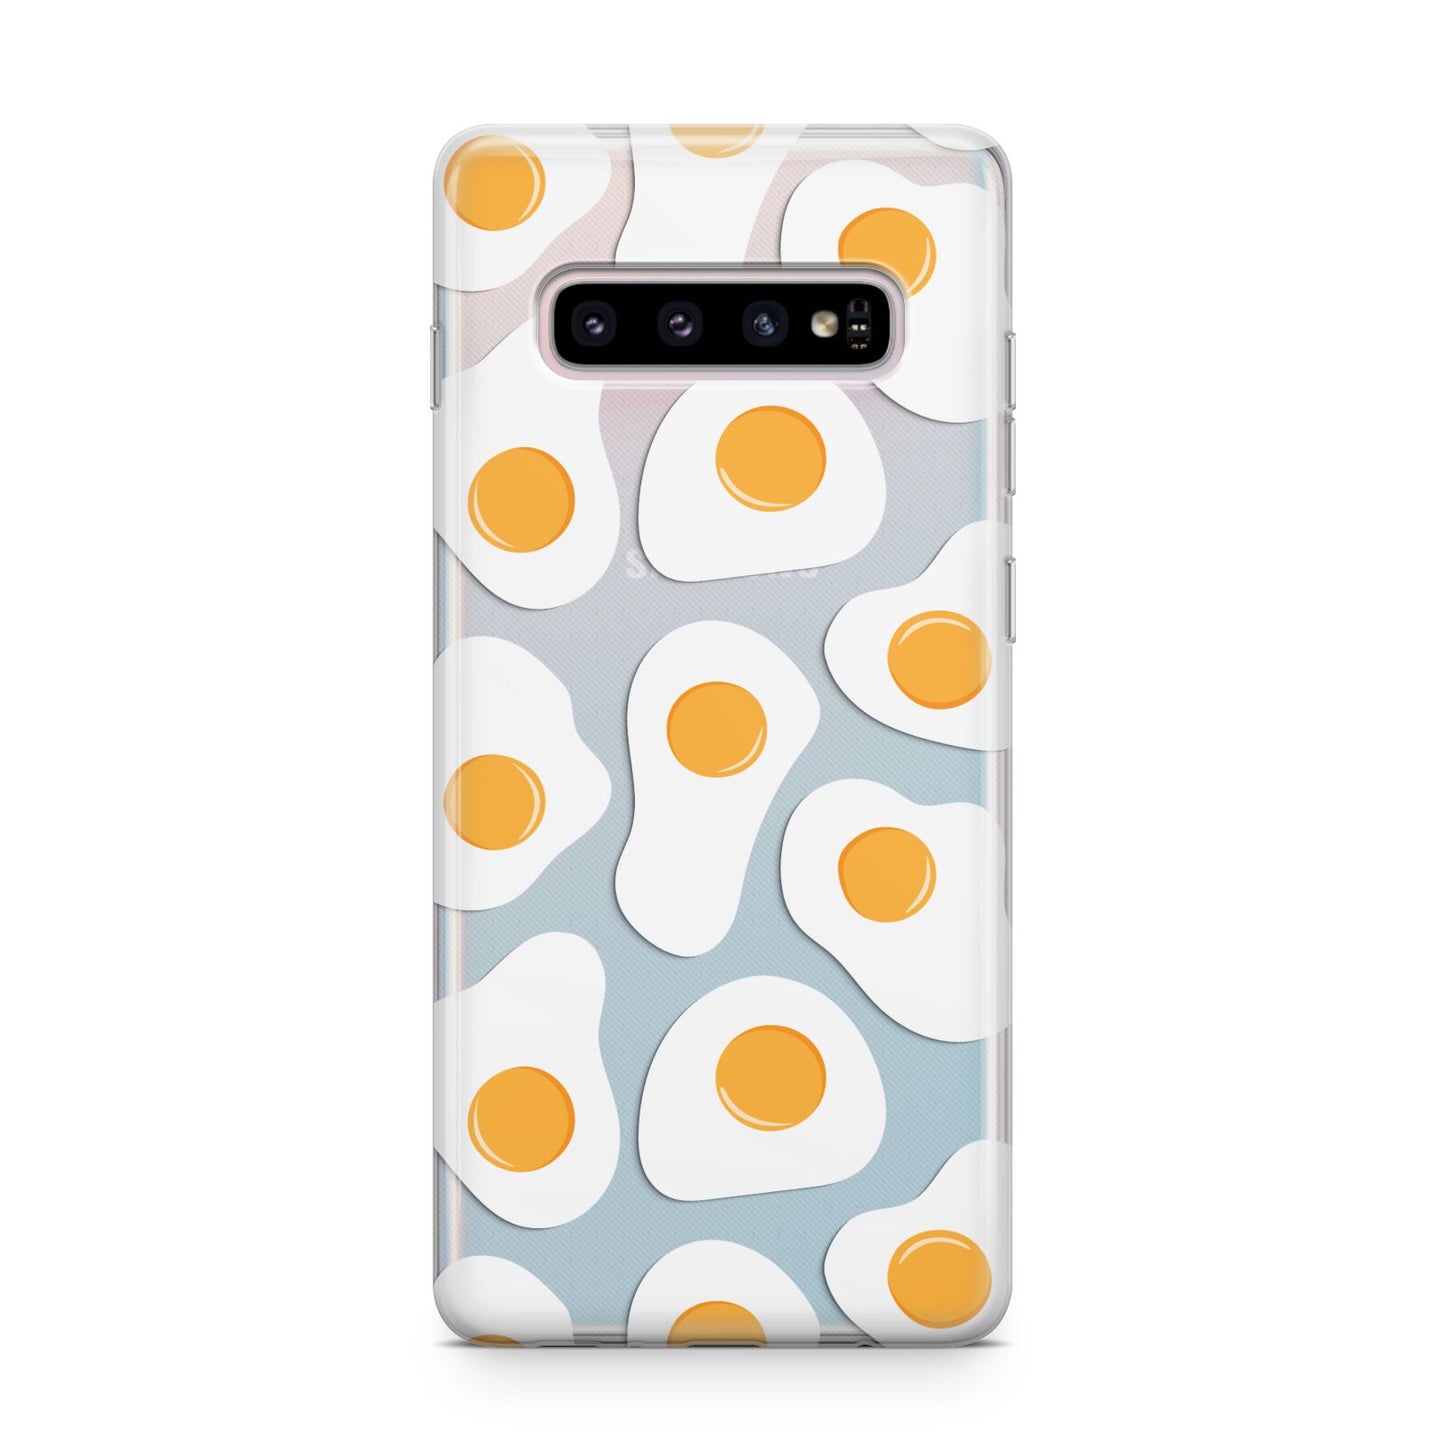 Fried Egg Samsung Galaxy S10 Plus Case